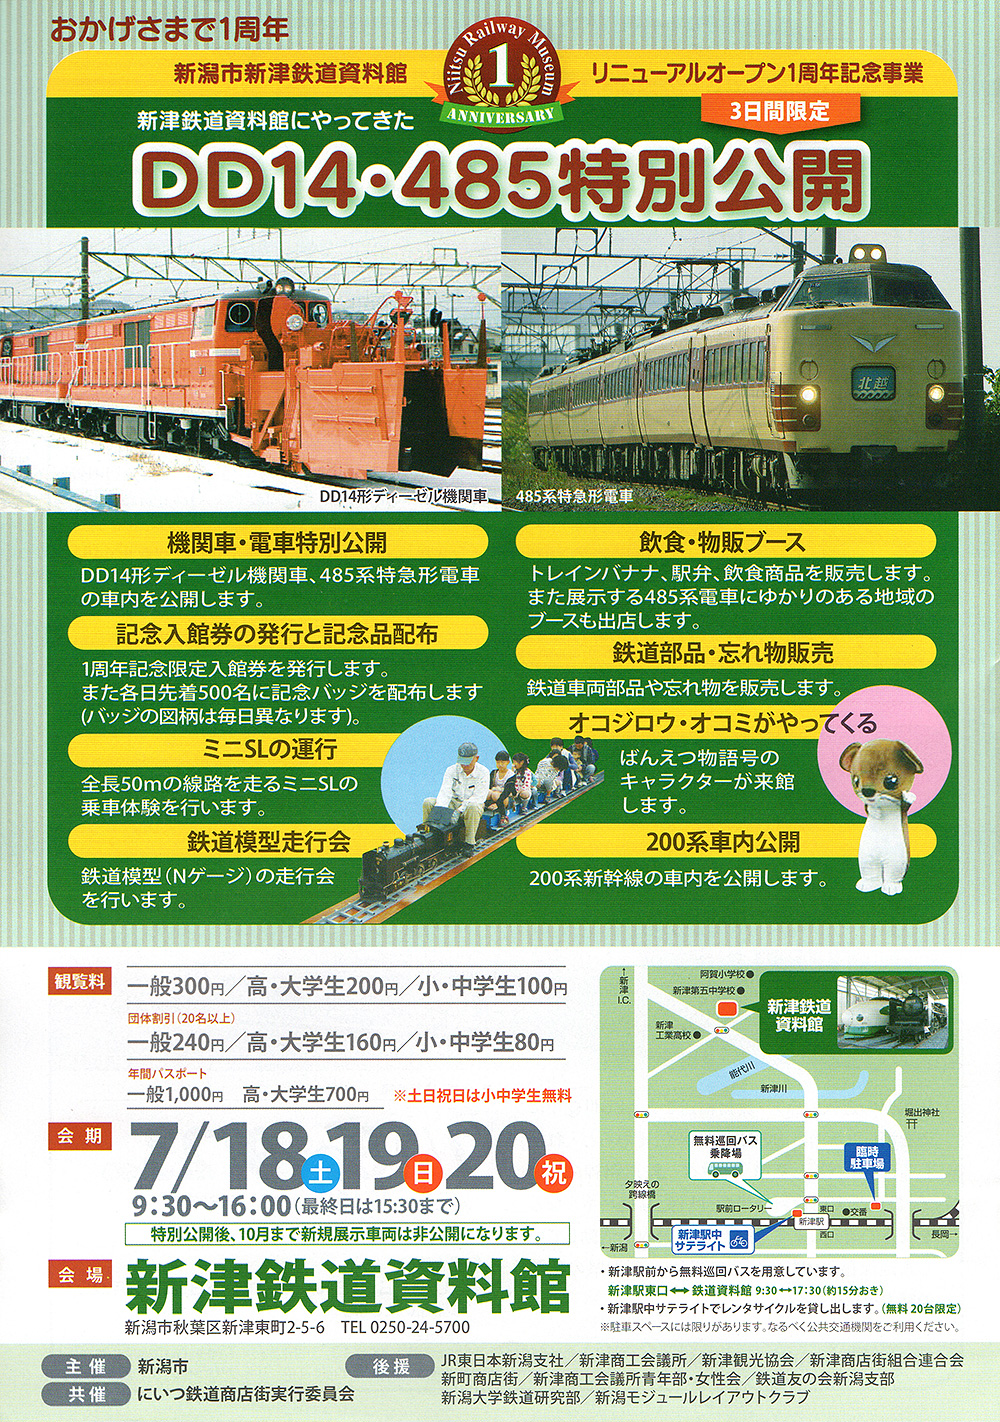 http://www.nomoto-tokeiten.jp/info/2015/07/08/img039.jpg